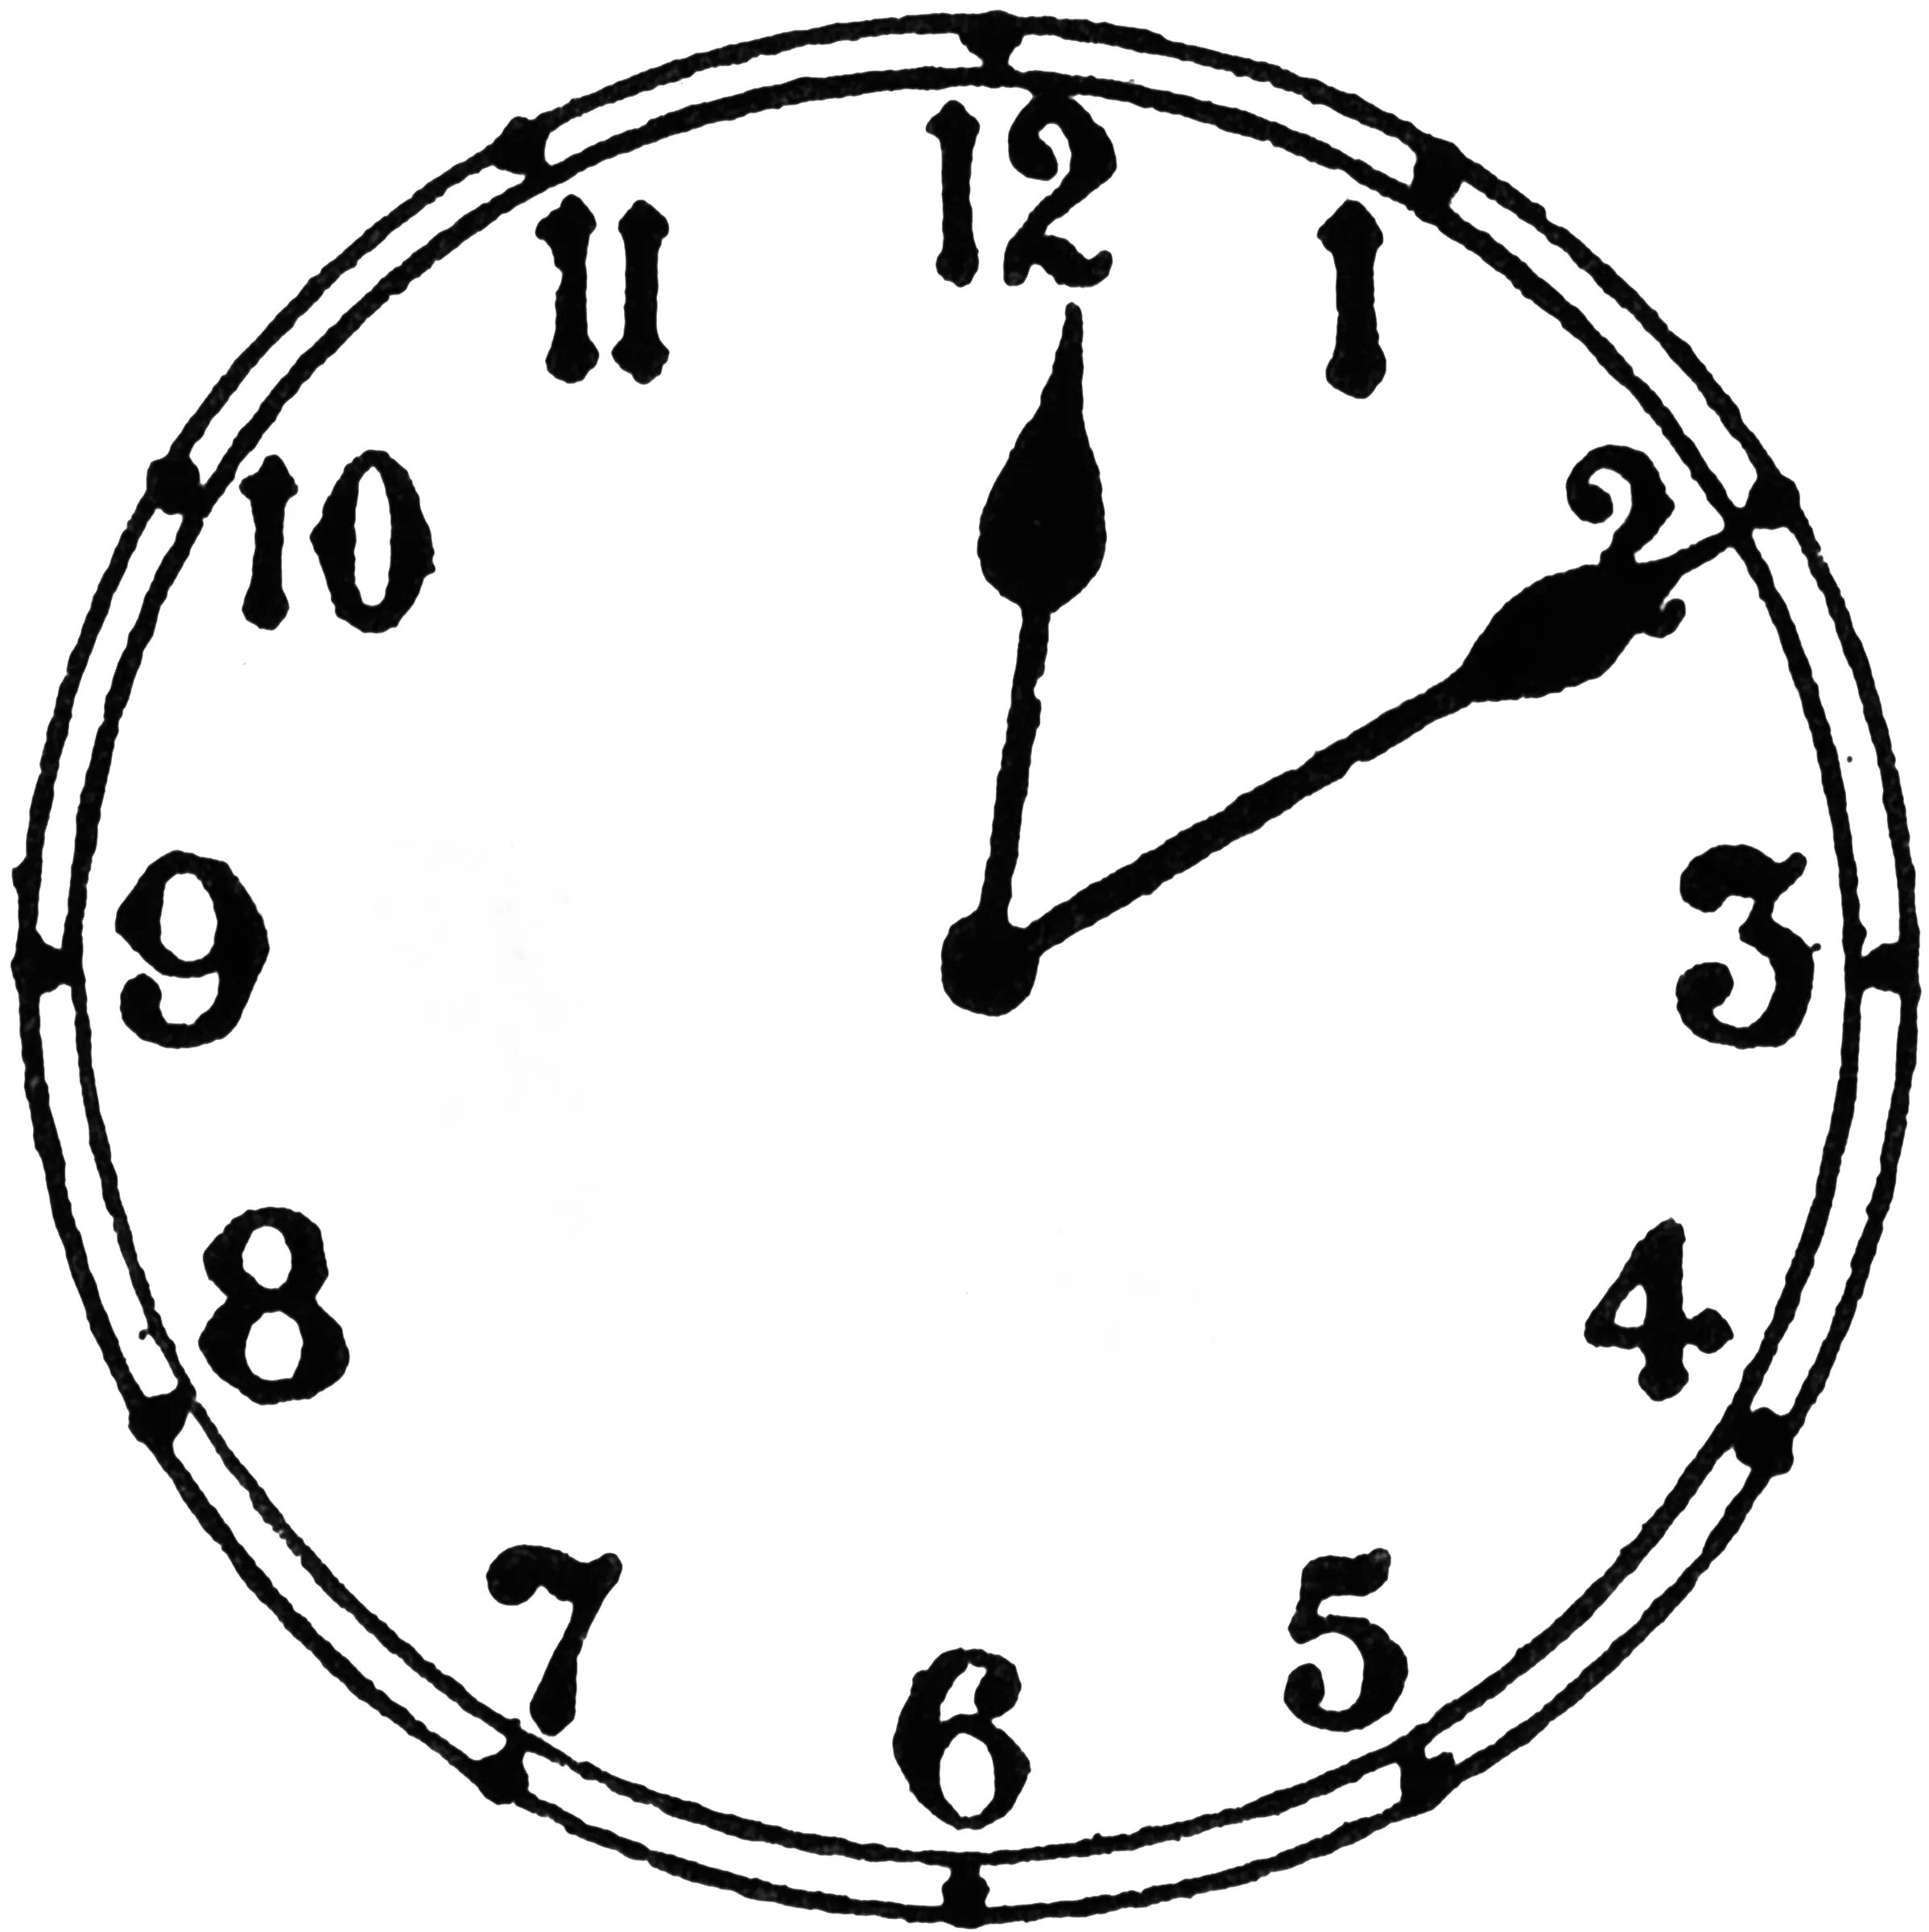 Время на часах 12 15. Часы 12:10. Циферблат часов на 12.10. 12 10 На часах. Циферблат 10 часов.